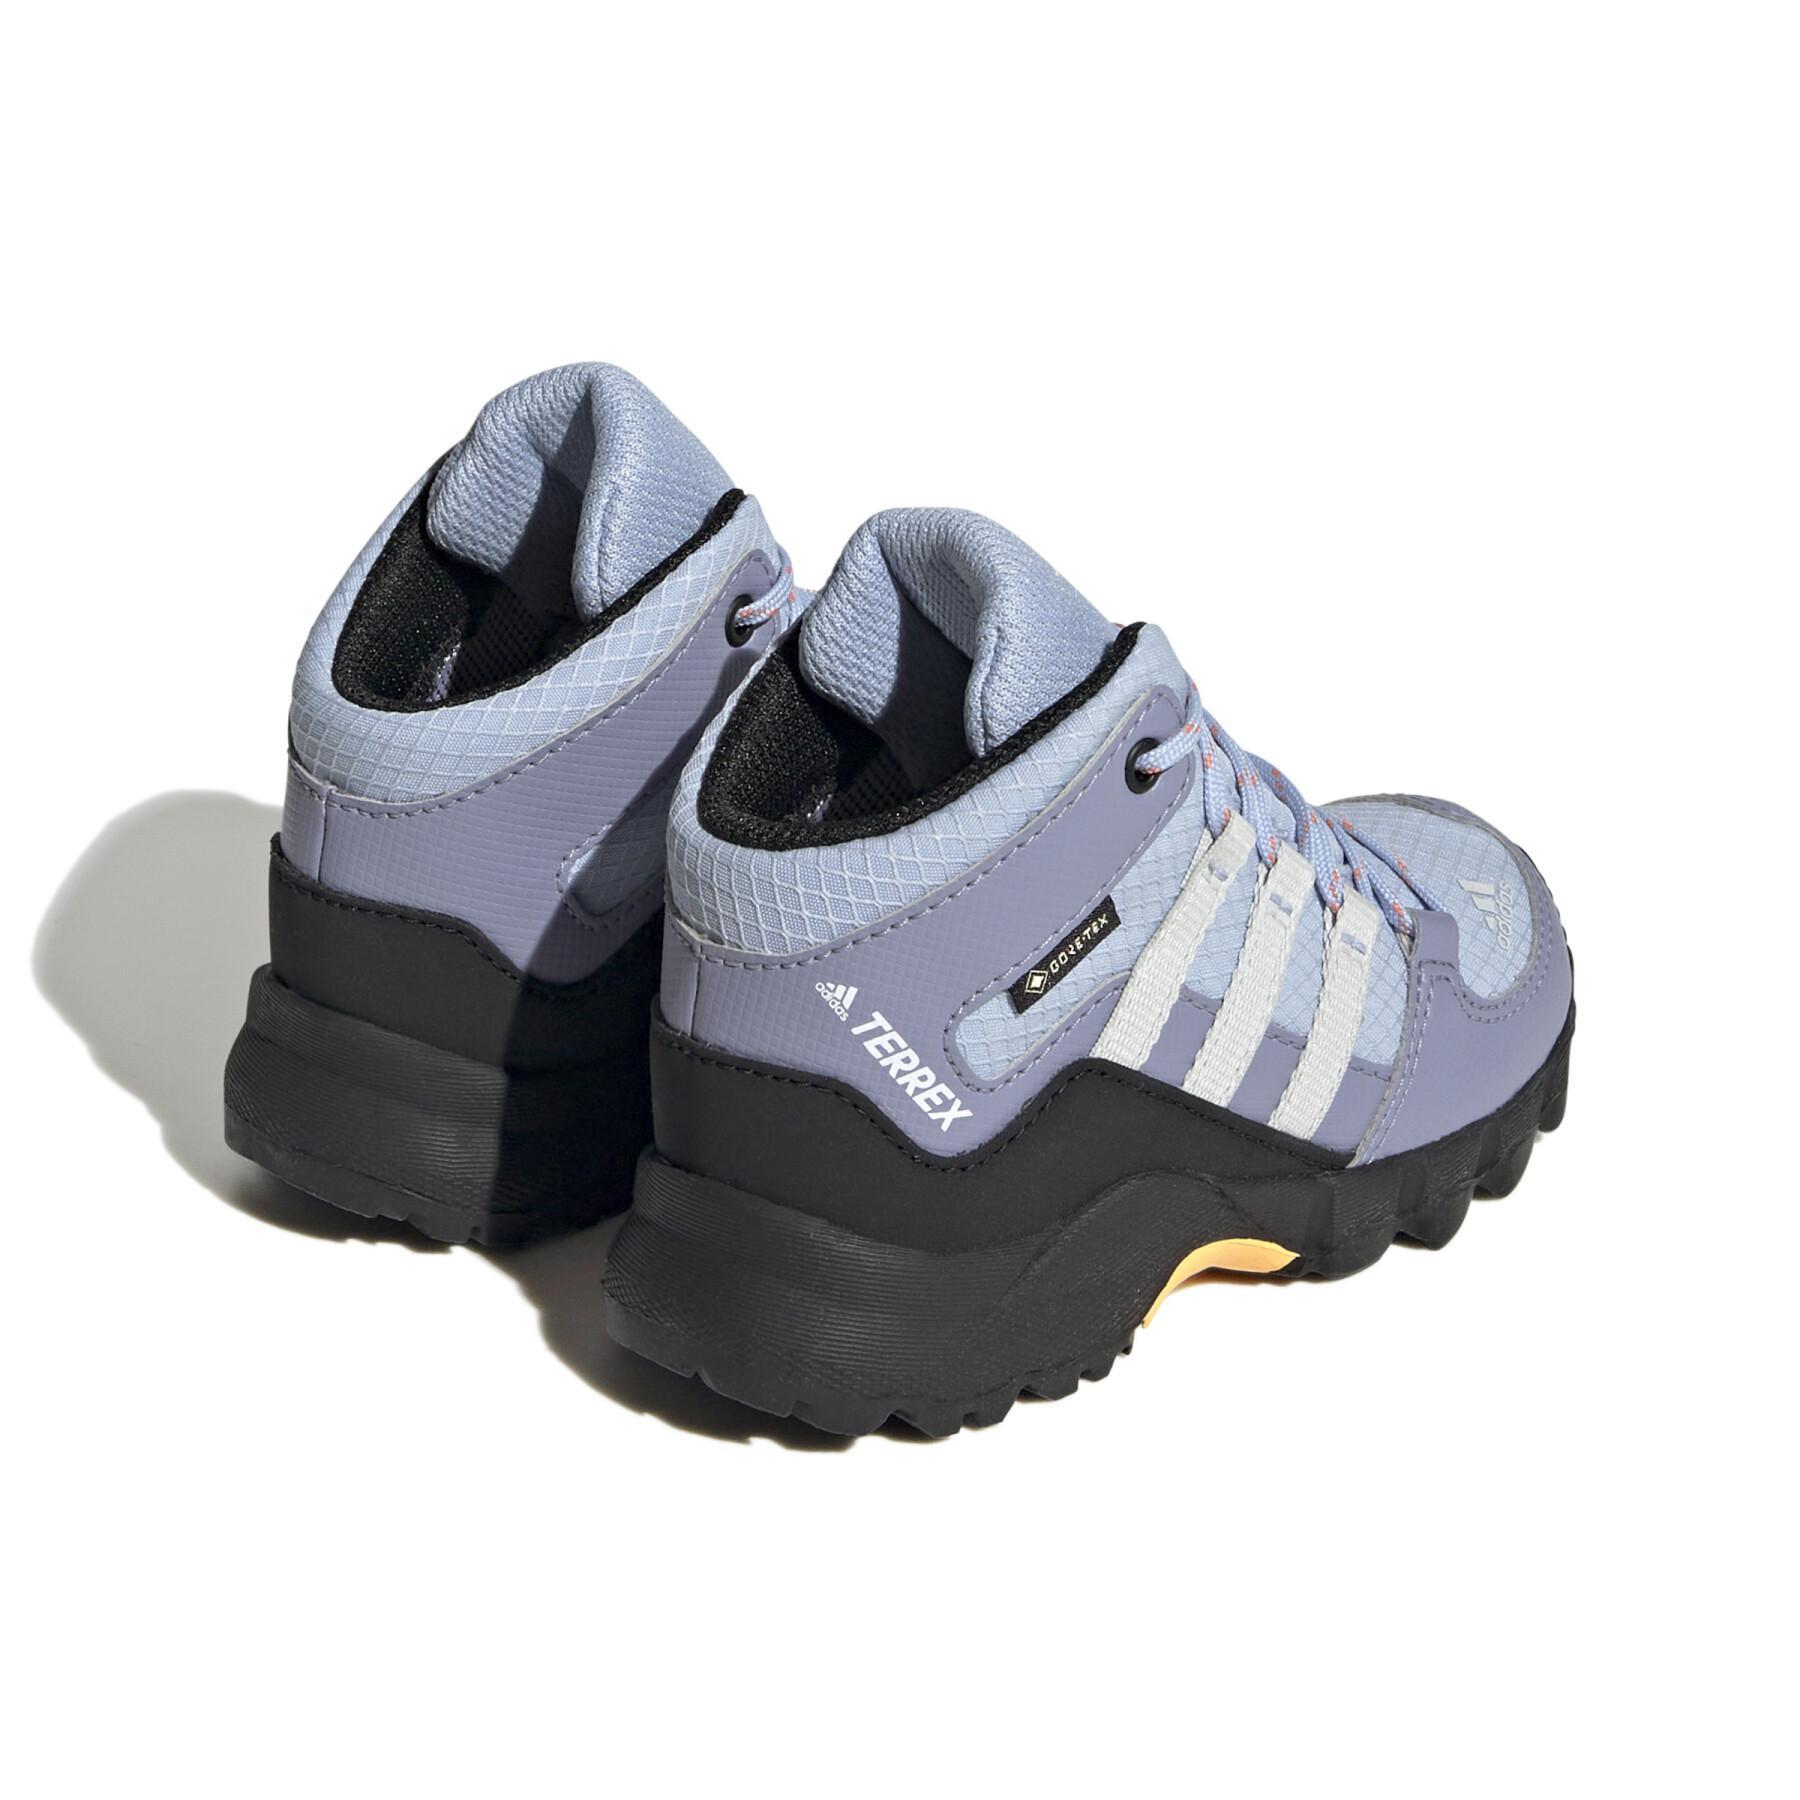 Baby hiking shoes adidas Terrex Mid GTX